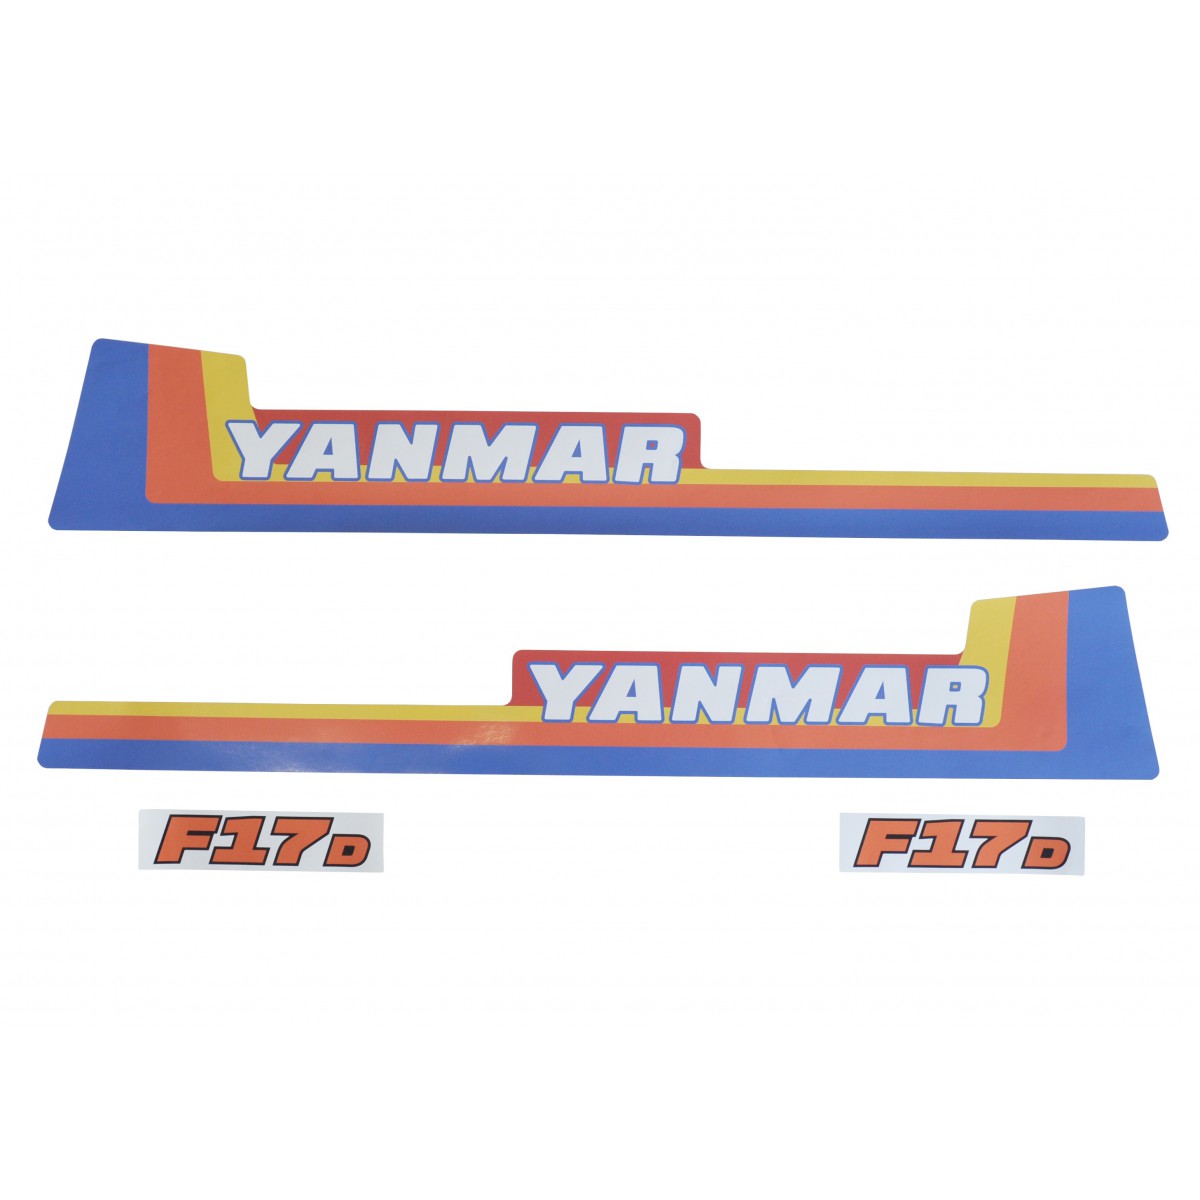 Calcas Yanmar F17D